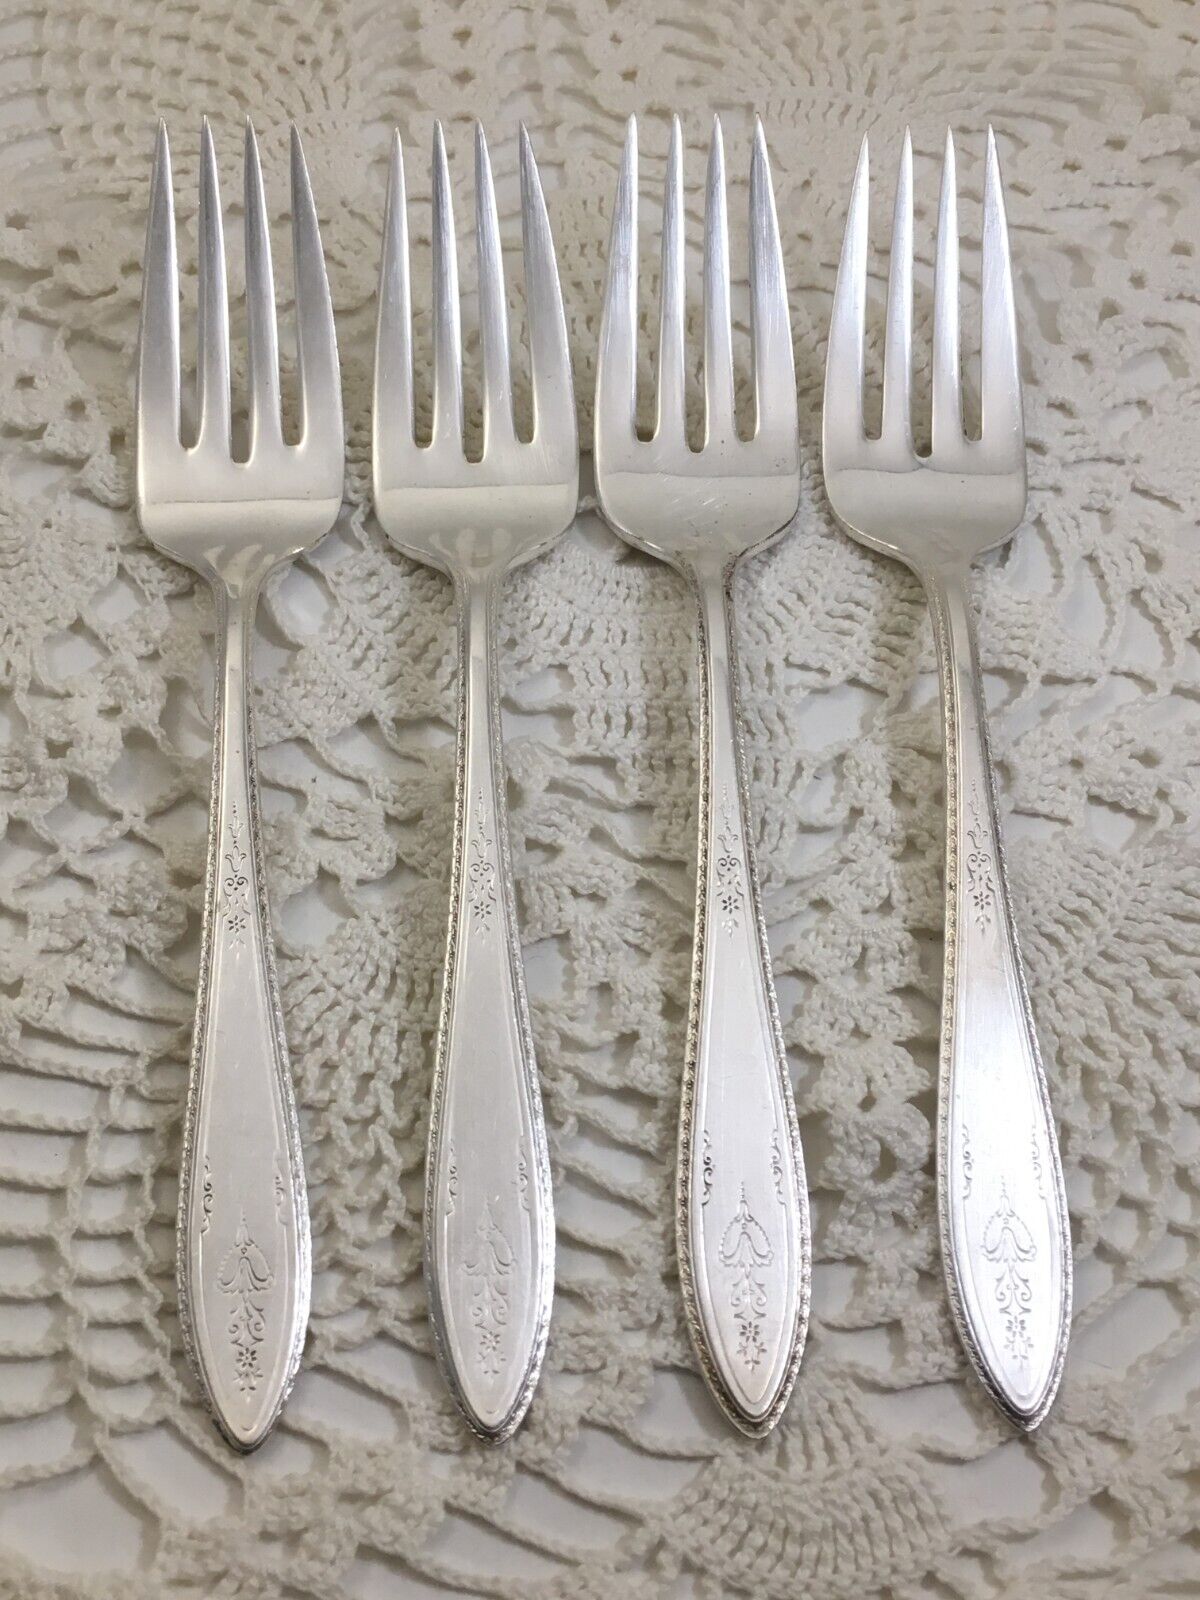 4 Salad Forks 1847 Rogers Bros ARGOSY International Silver Plate 1926 Flatware